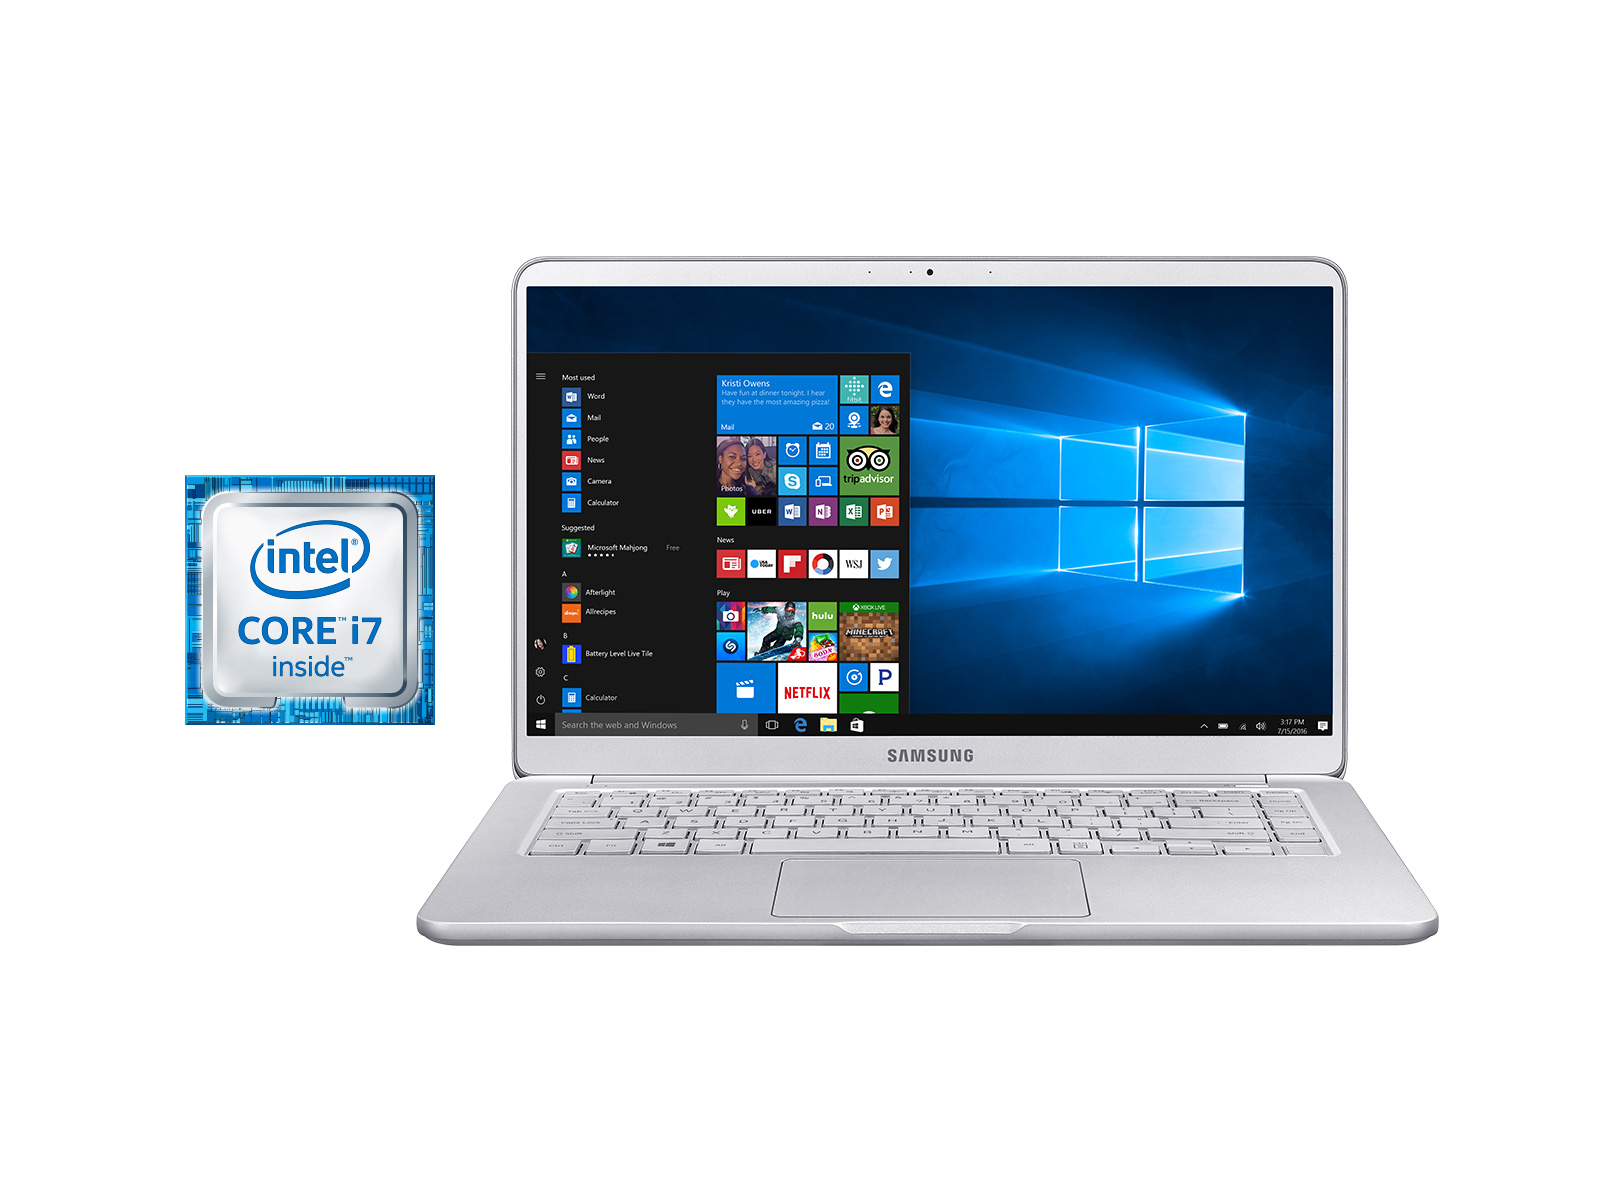 Retaliate Legepladsudstyr tornado Notebook 9 15" (16GB RAM) Windows Laptops - NP900X5N-X01US | Samsung US